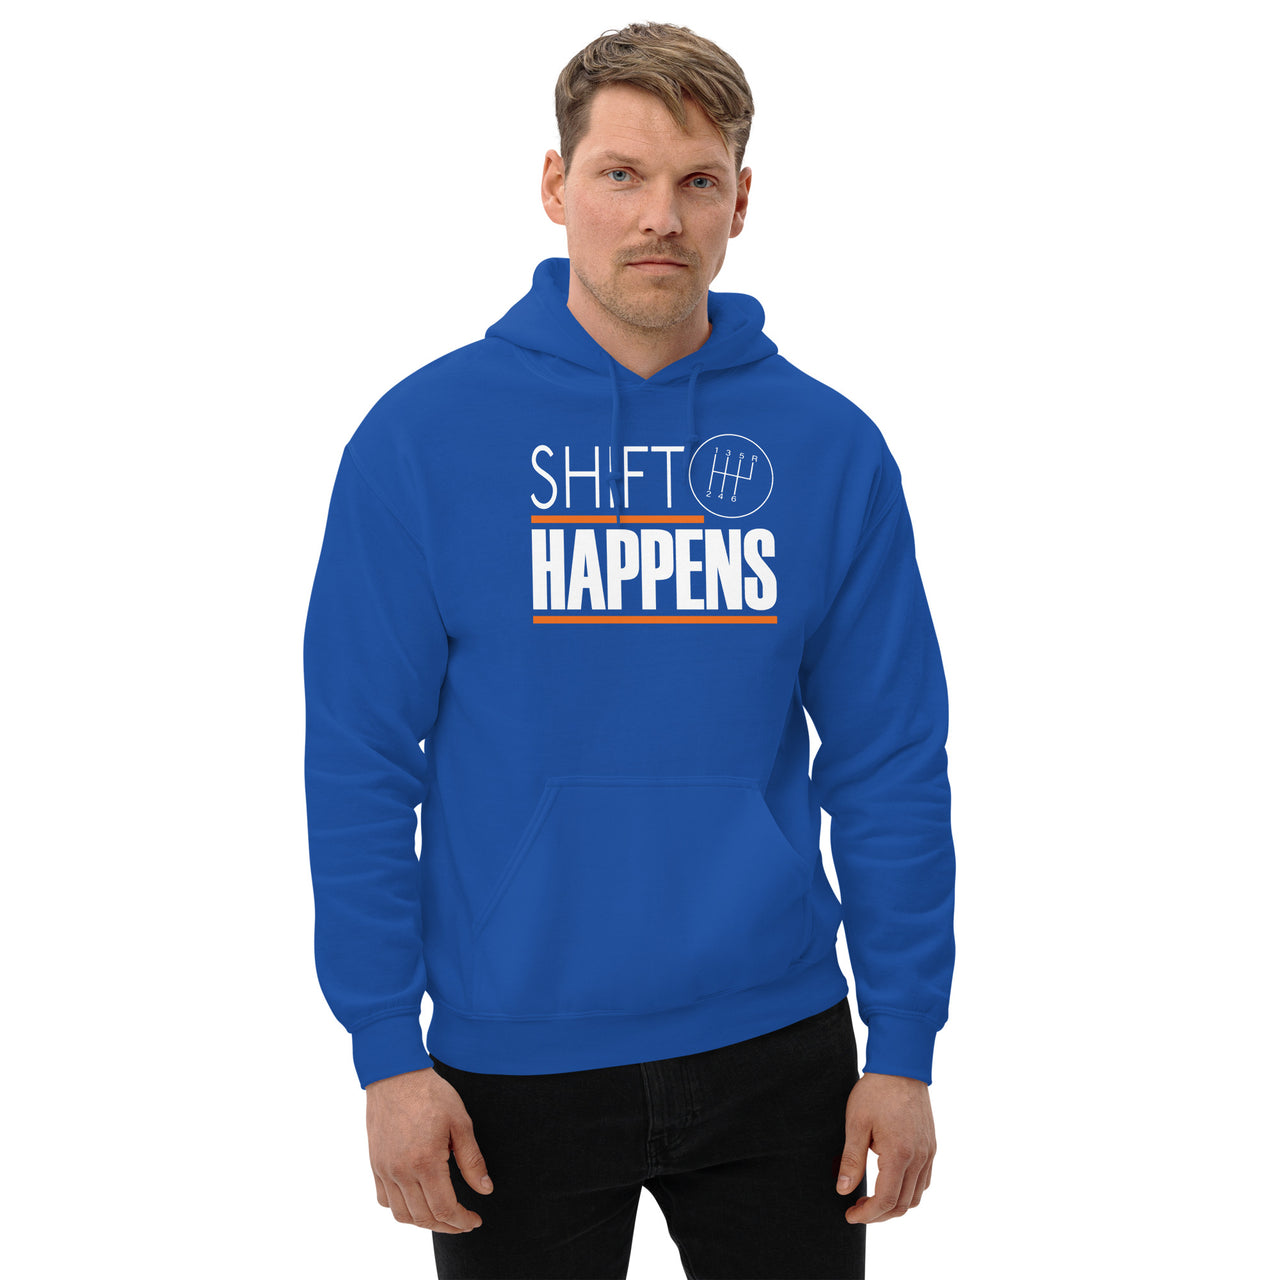 Car Enthusiast Hoodie, Shift Happens Sweatshirt